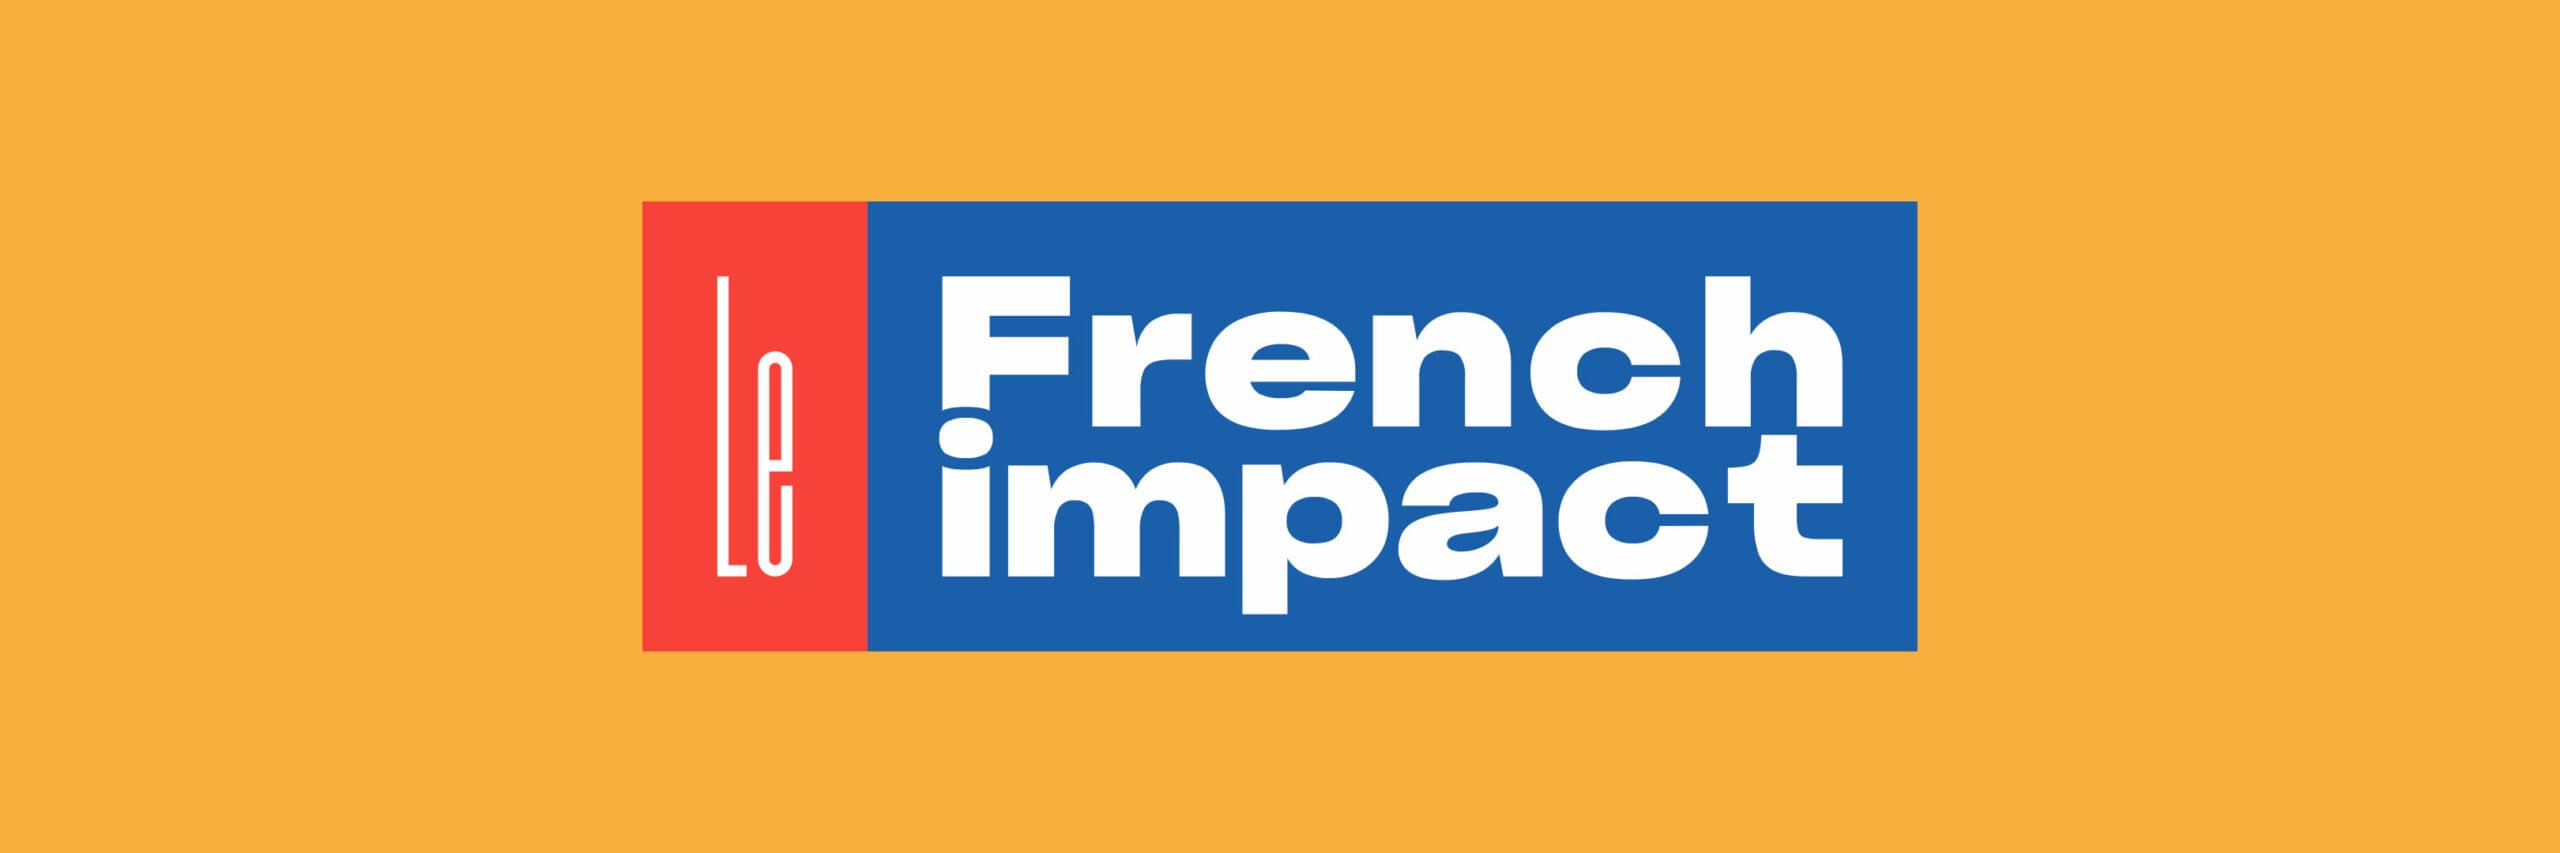 Le logo de French Impact